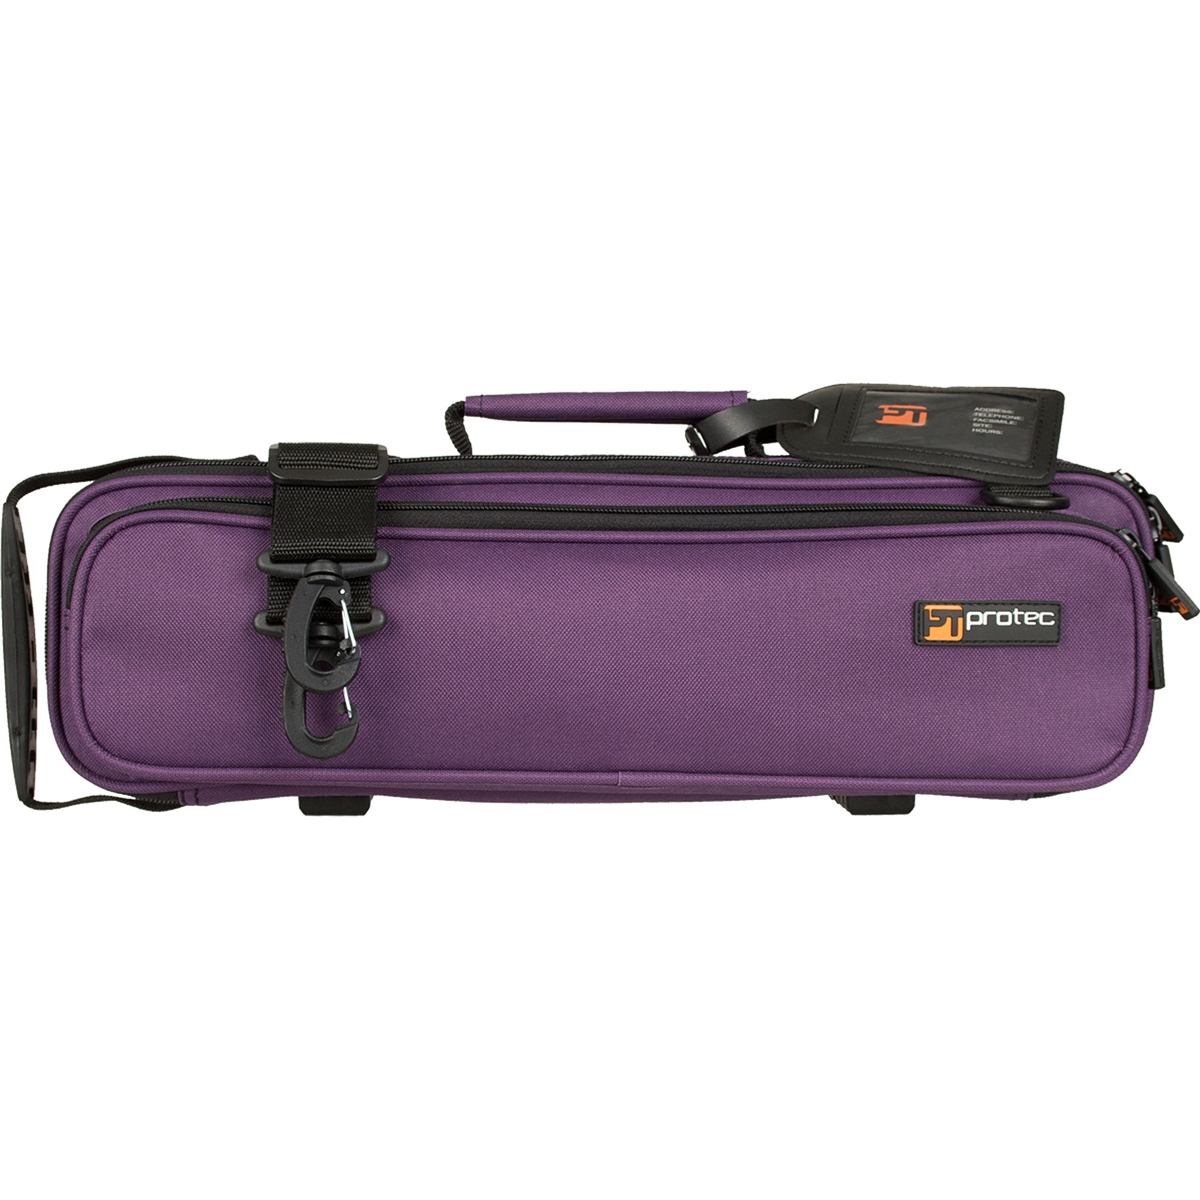 Protec Koffer - Querflöte Kofferüberzug - A 308 - Violett